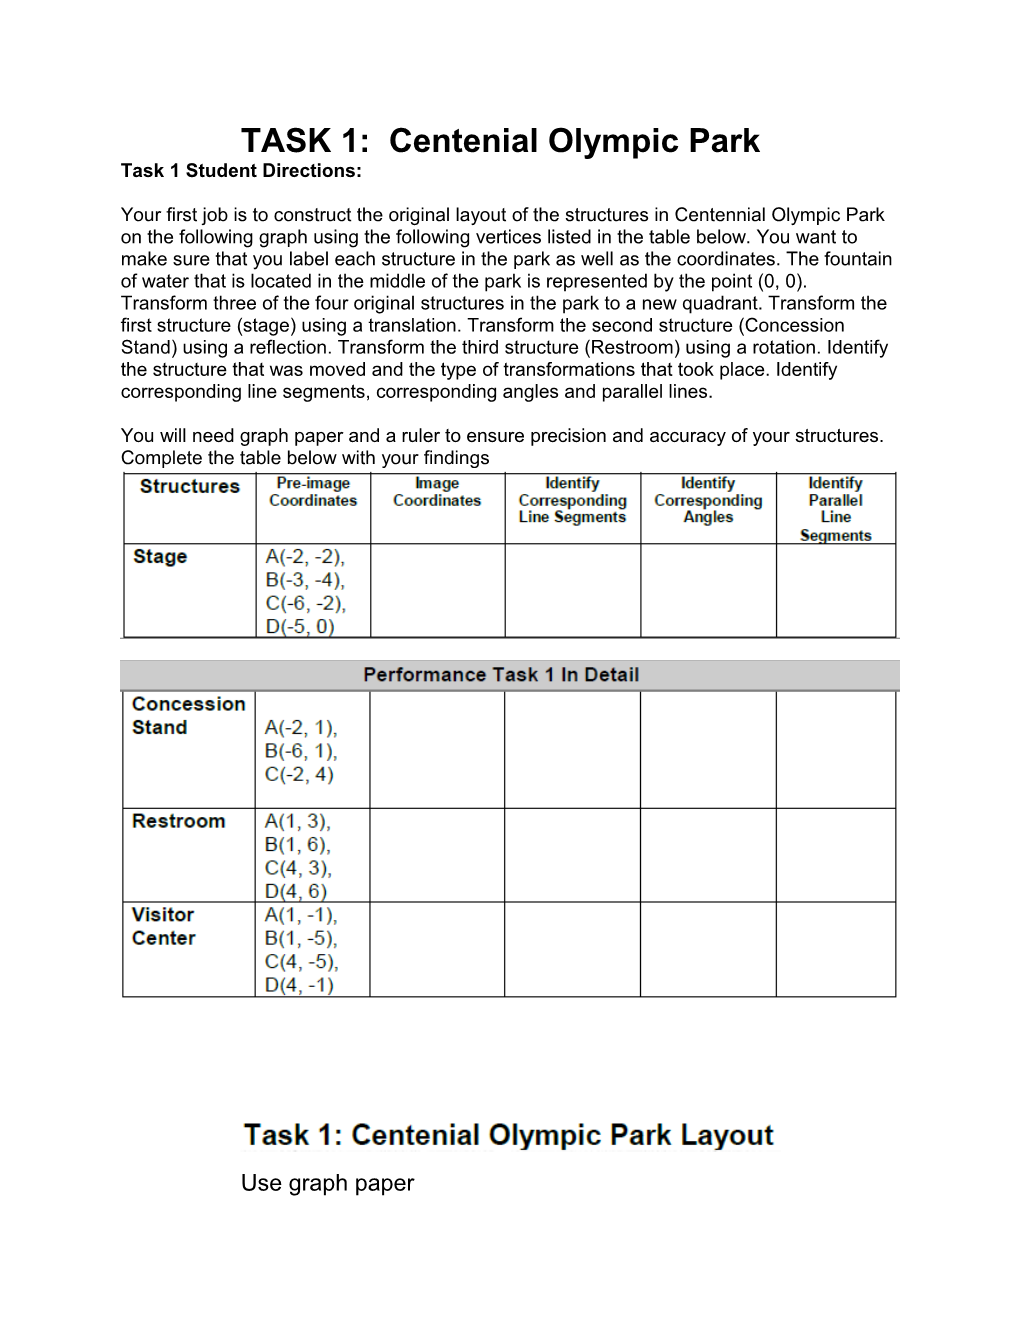 TASK 1: Centenial Olympic Park